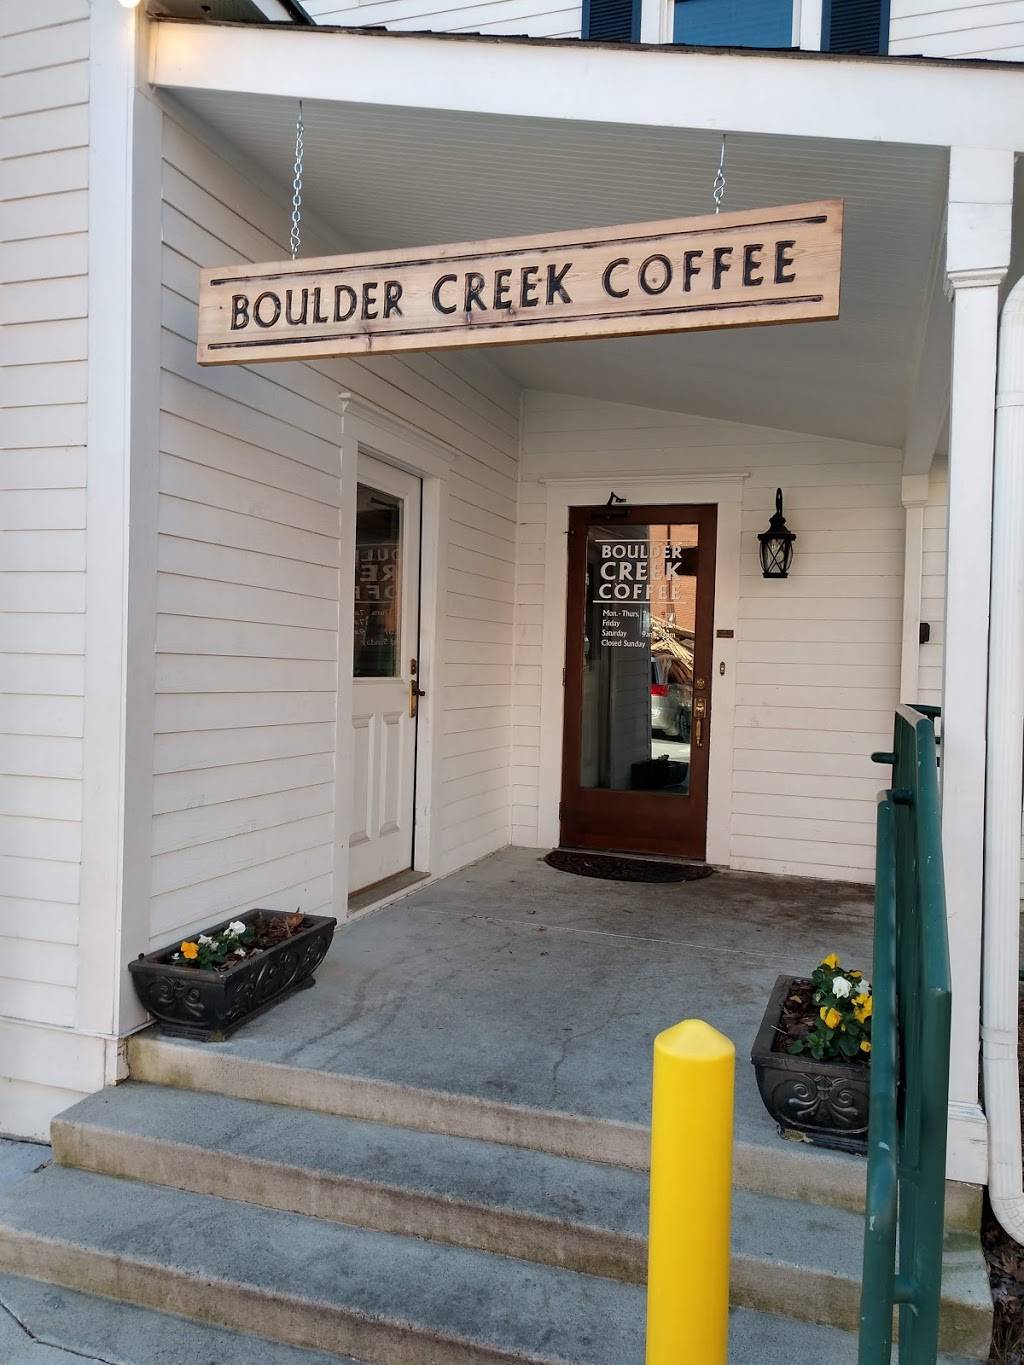 boulder creek coffee lawrenceville ga 30046